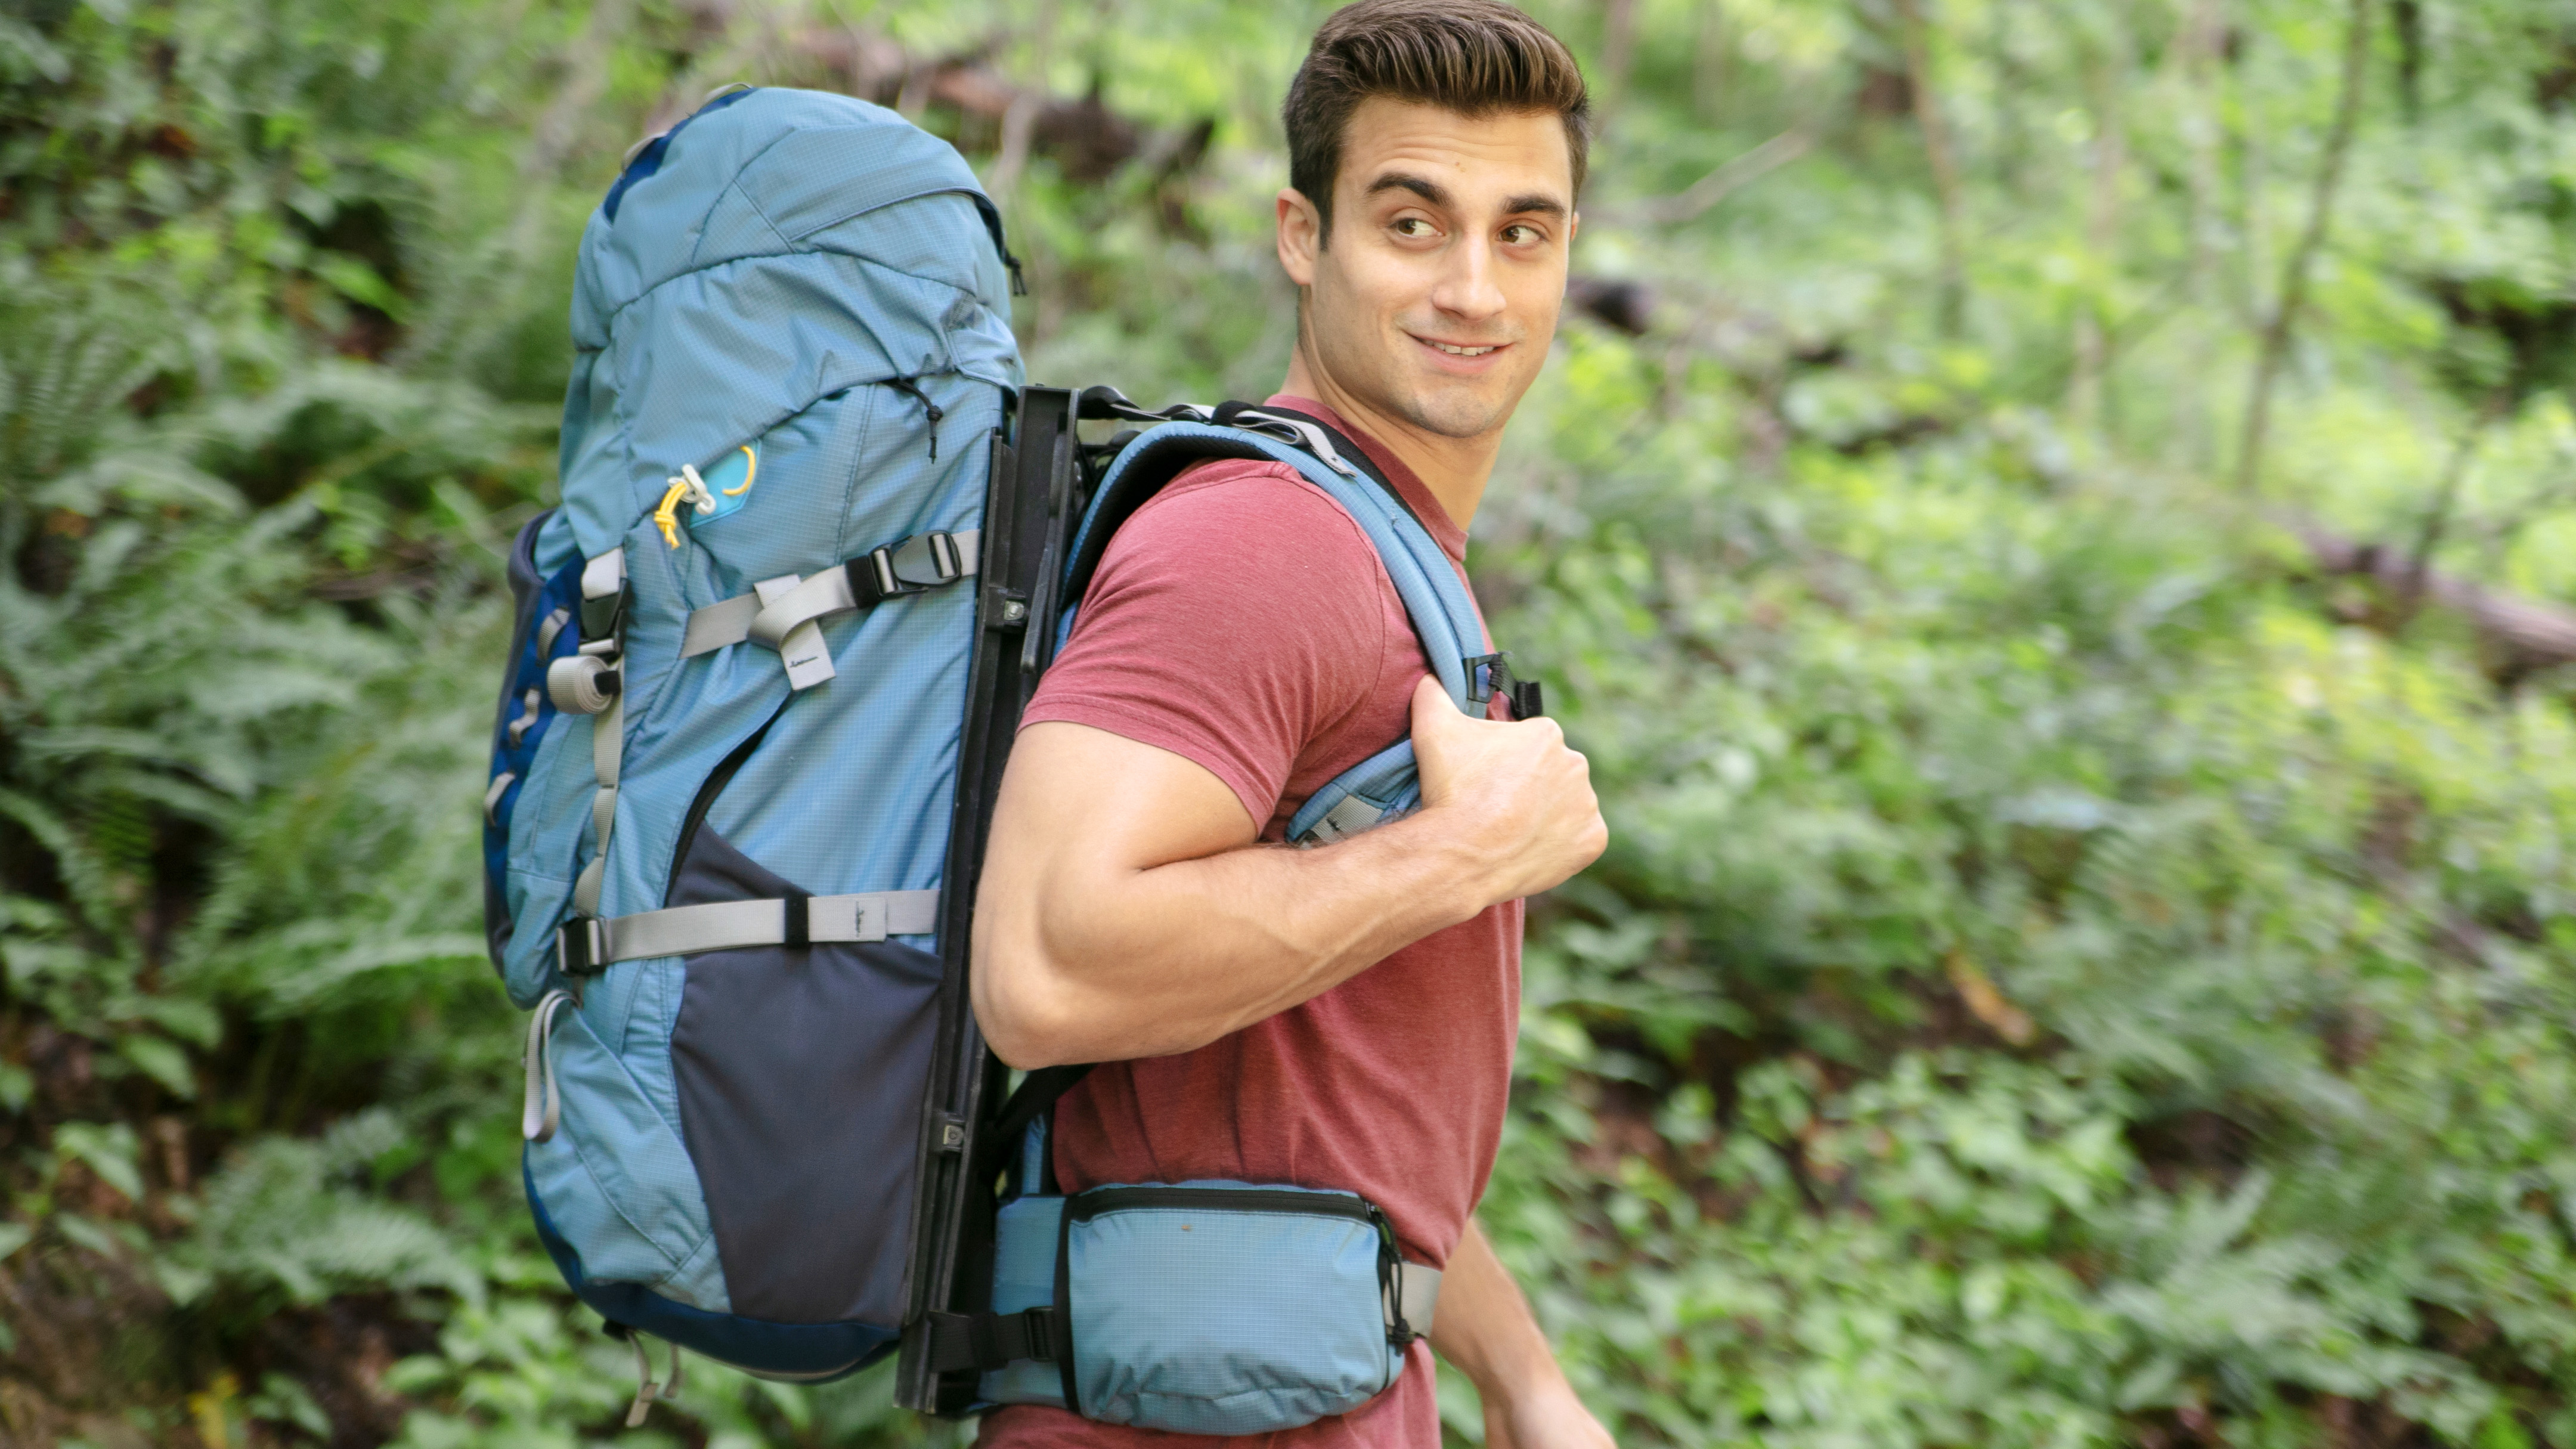 Floating Backpack Claimed To Ease Burden Of Travel Cnn Travel